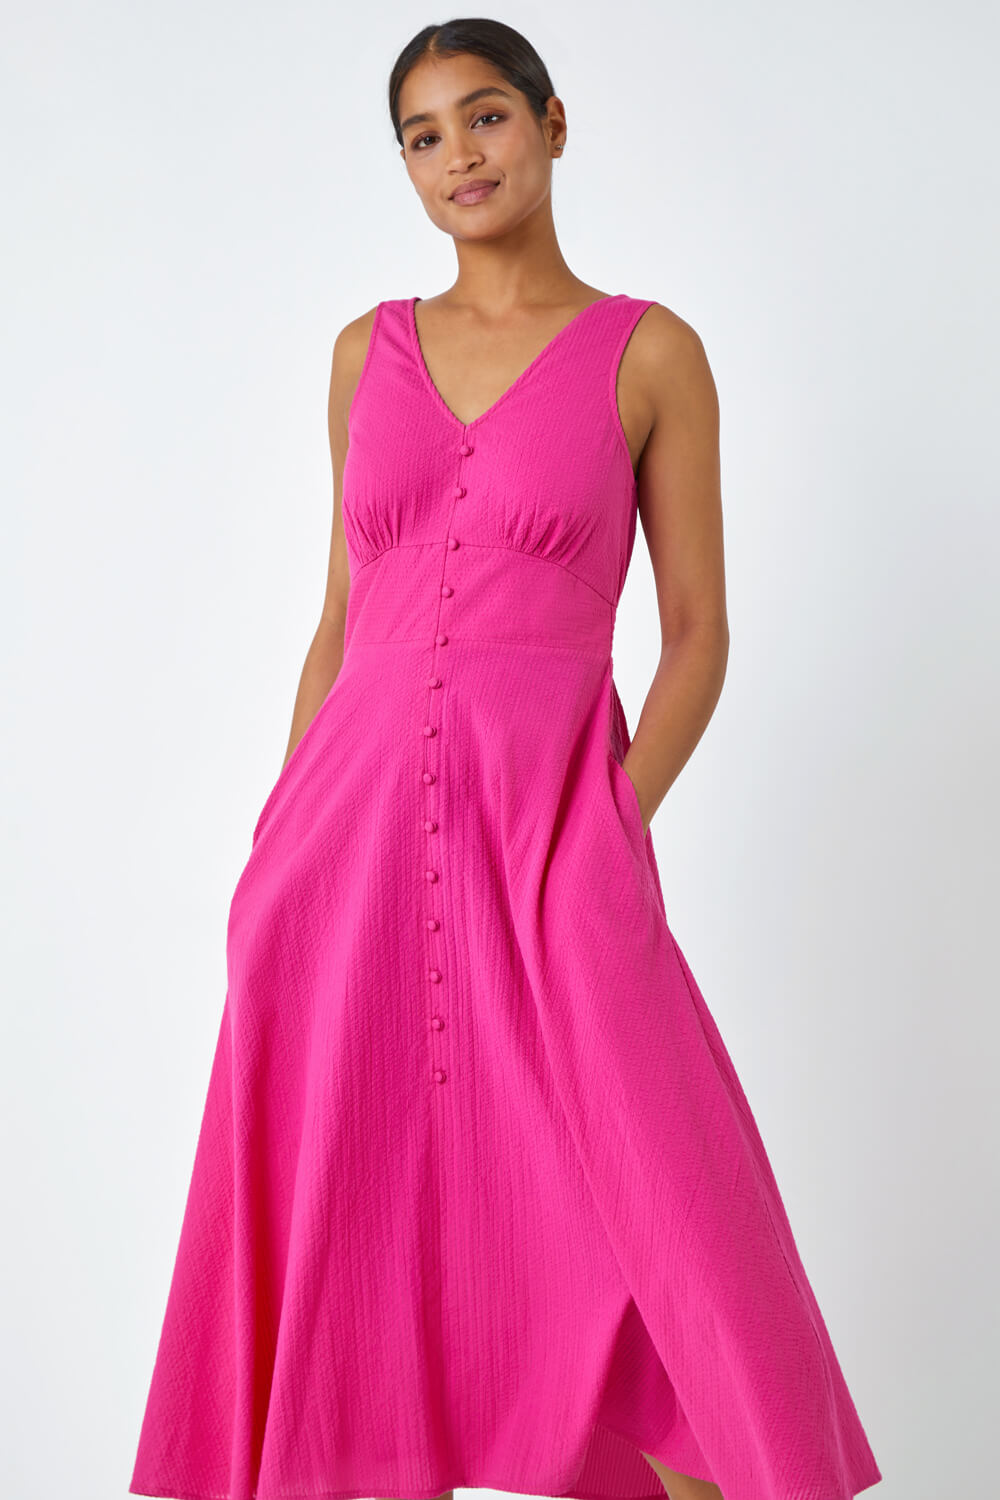 PINK Sleeveless Cotton Midi Dress, Image 4 of 5